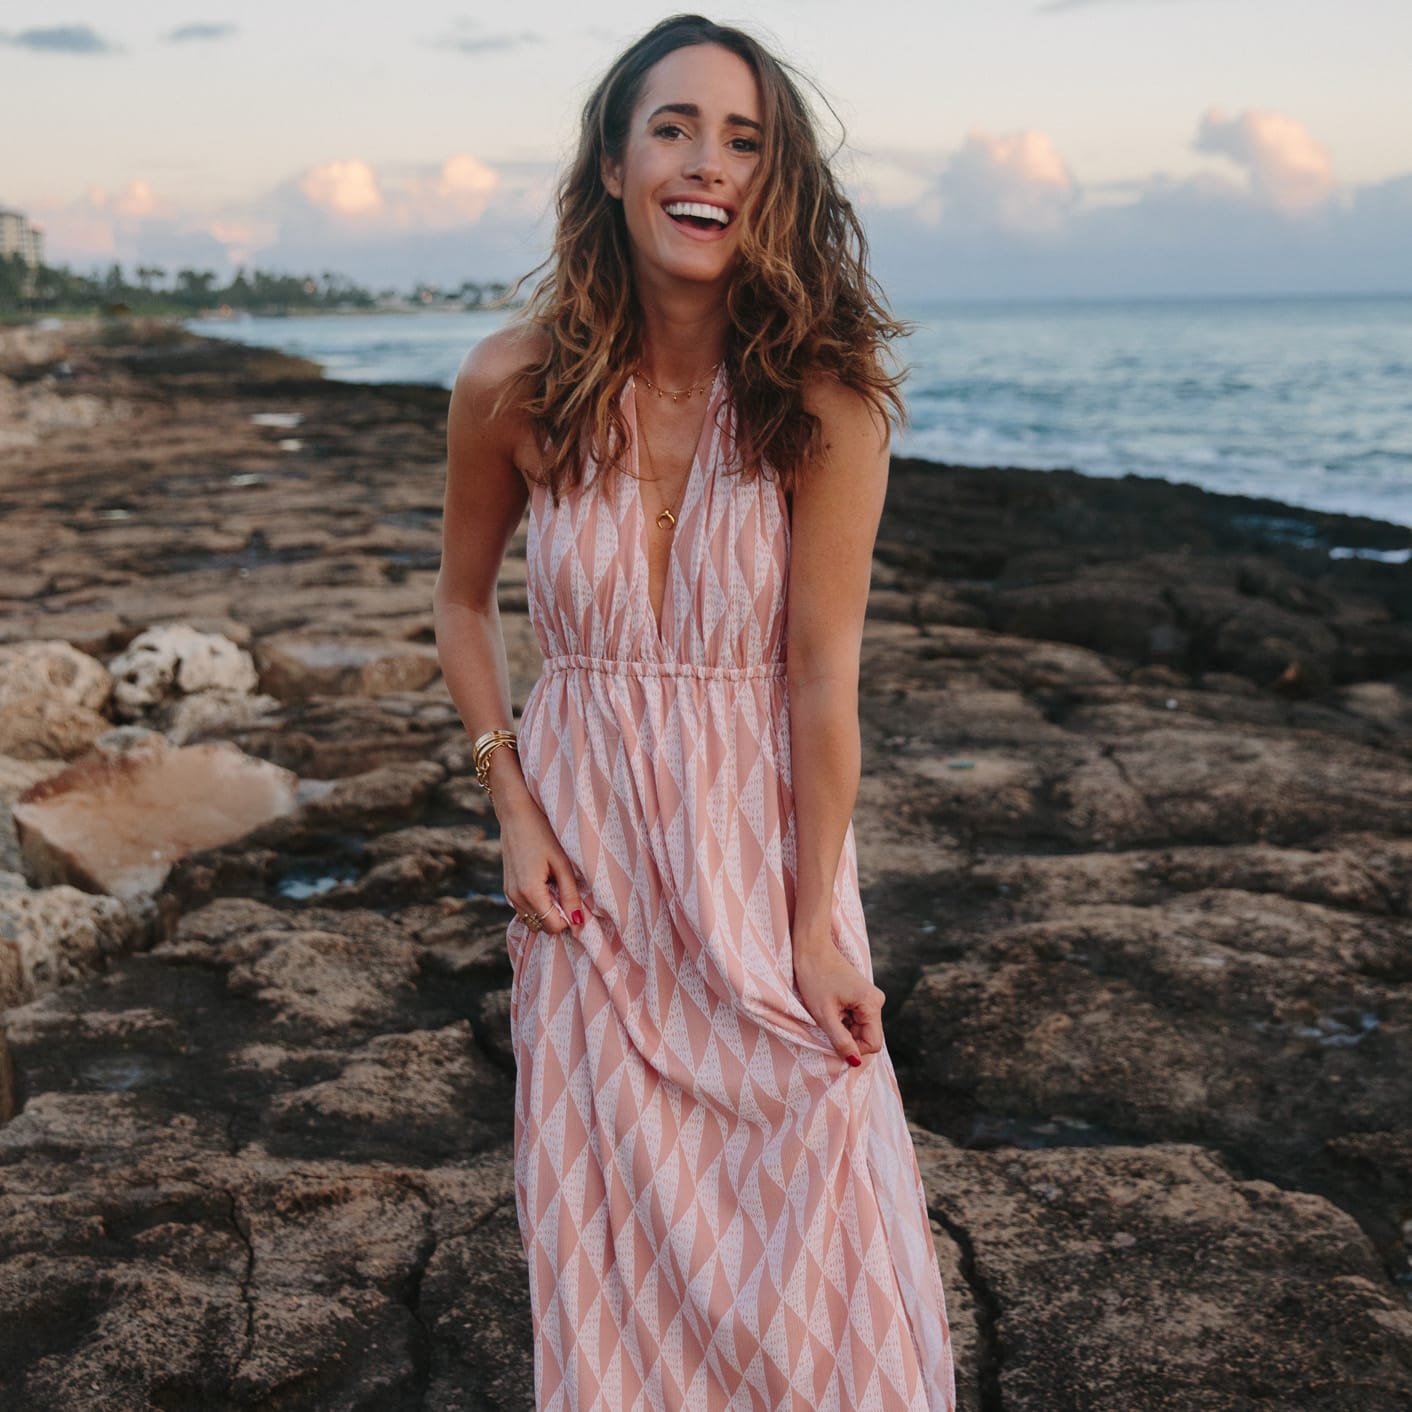 Louise Roe wearing a printed maxi dress in Hawaii